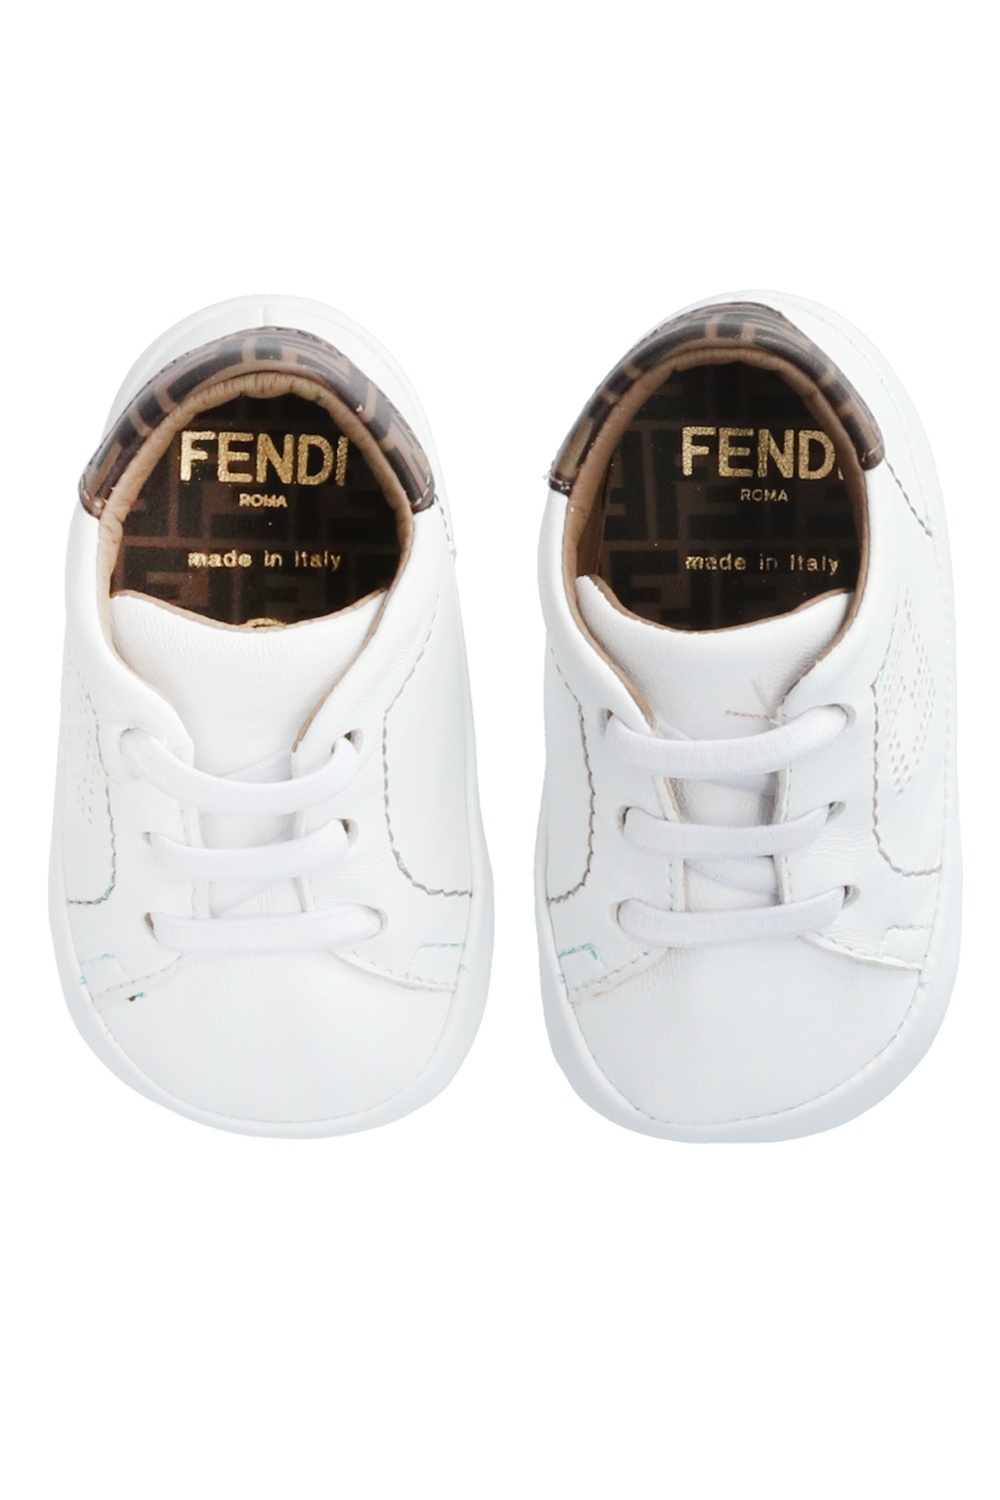 fendi jacket Kids Sneakers with logo